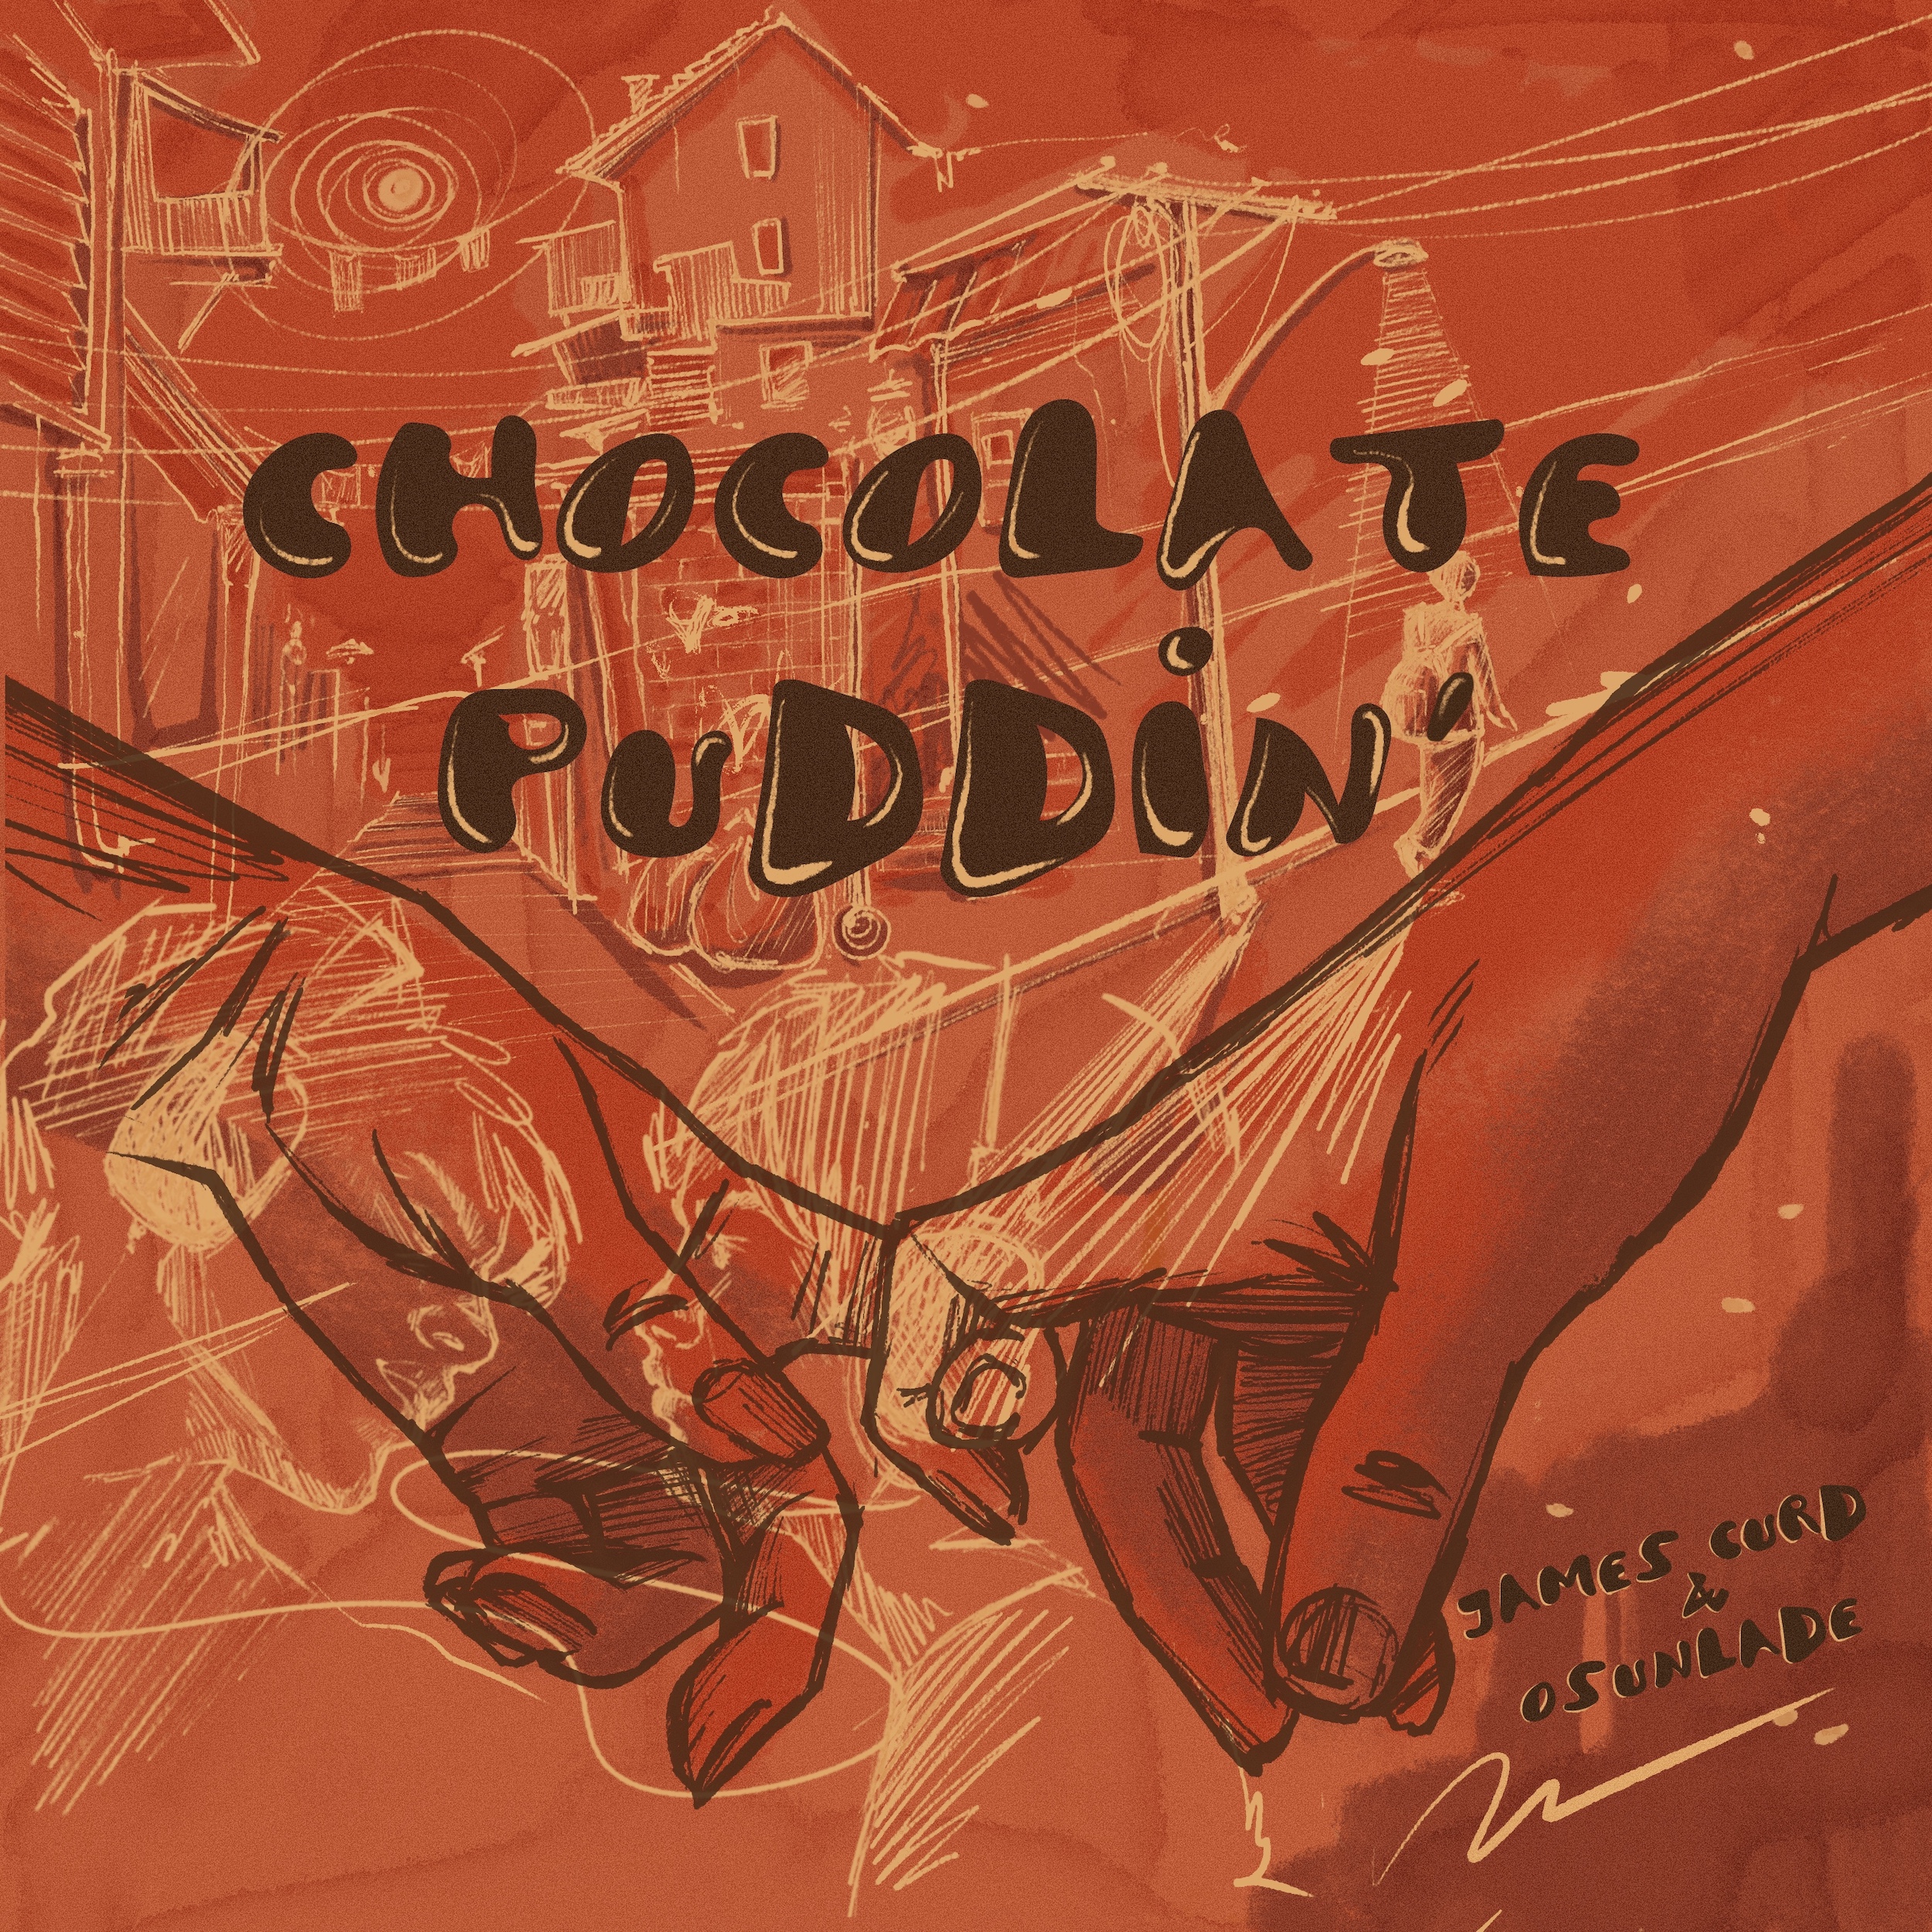 James Curd, Osunlade - Chocolate Puddin' : 12inch